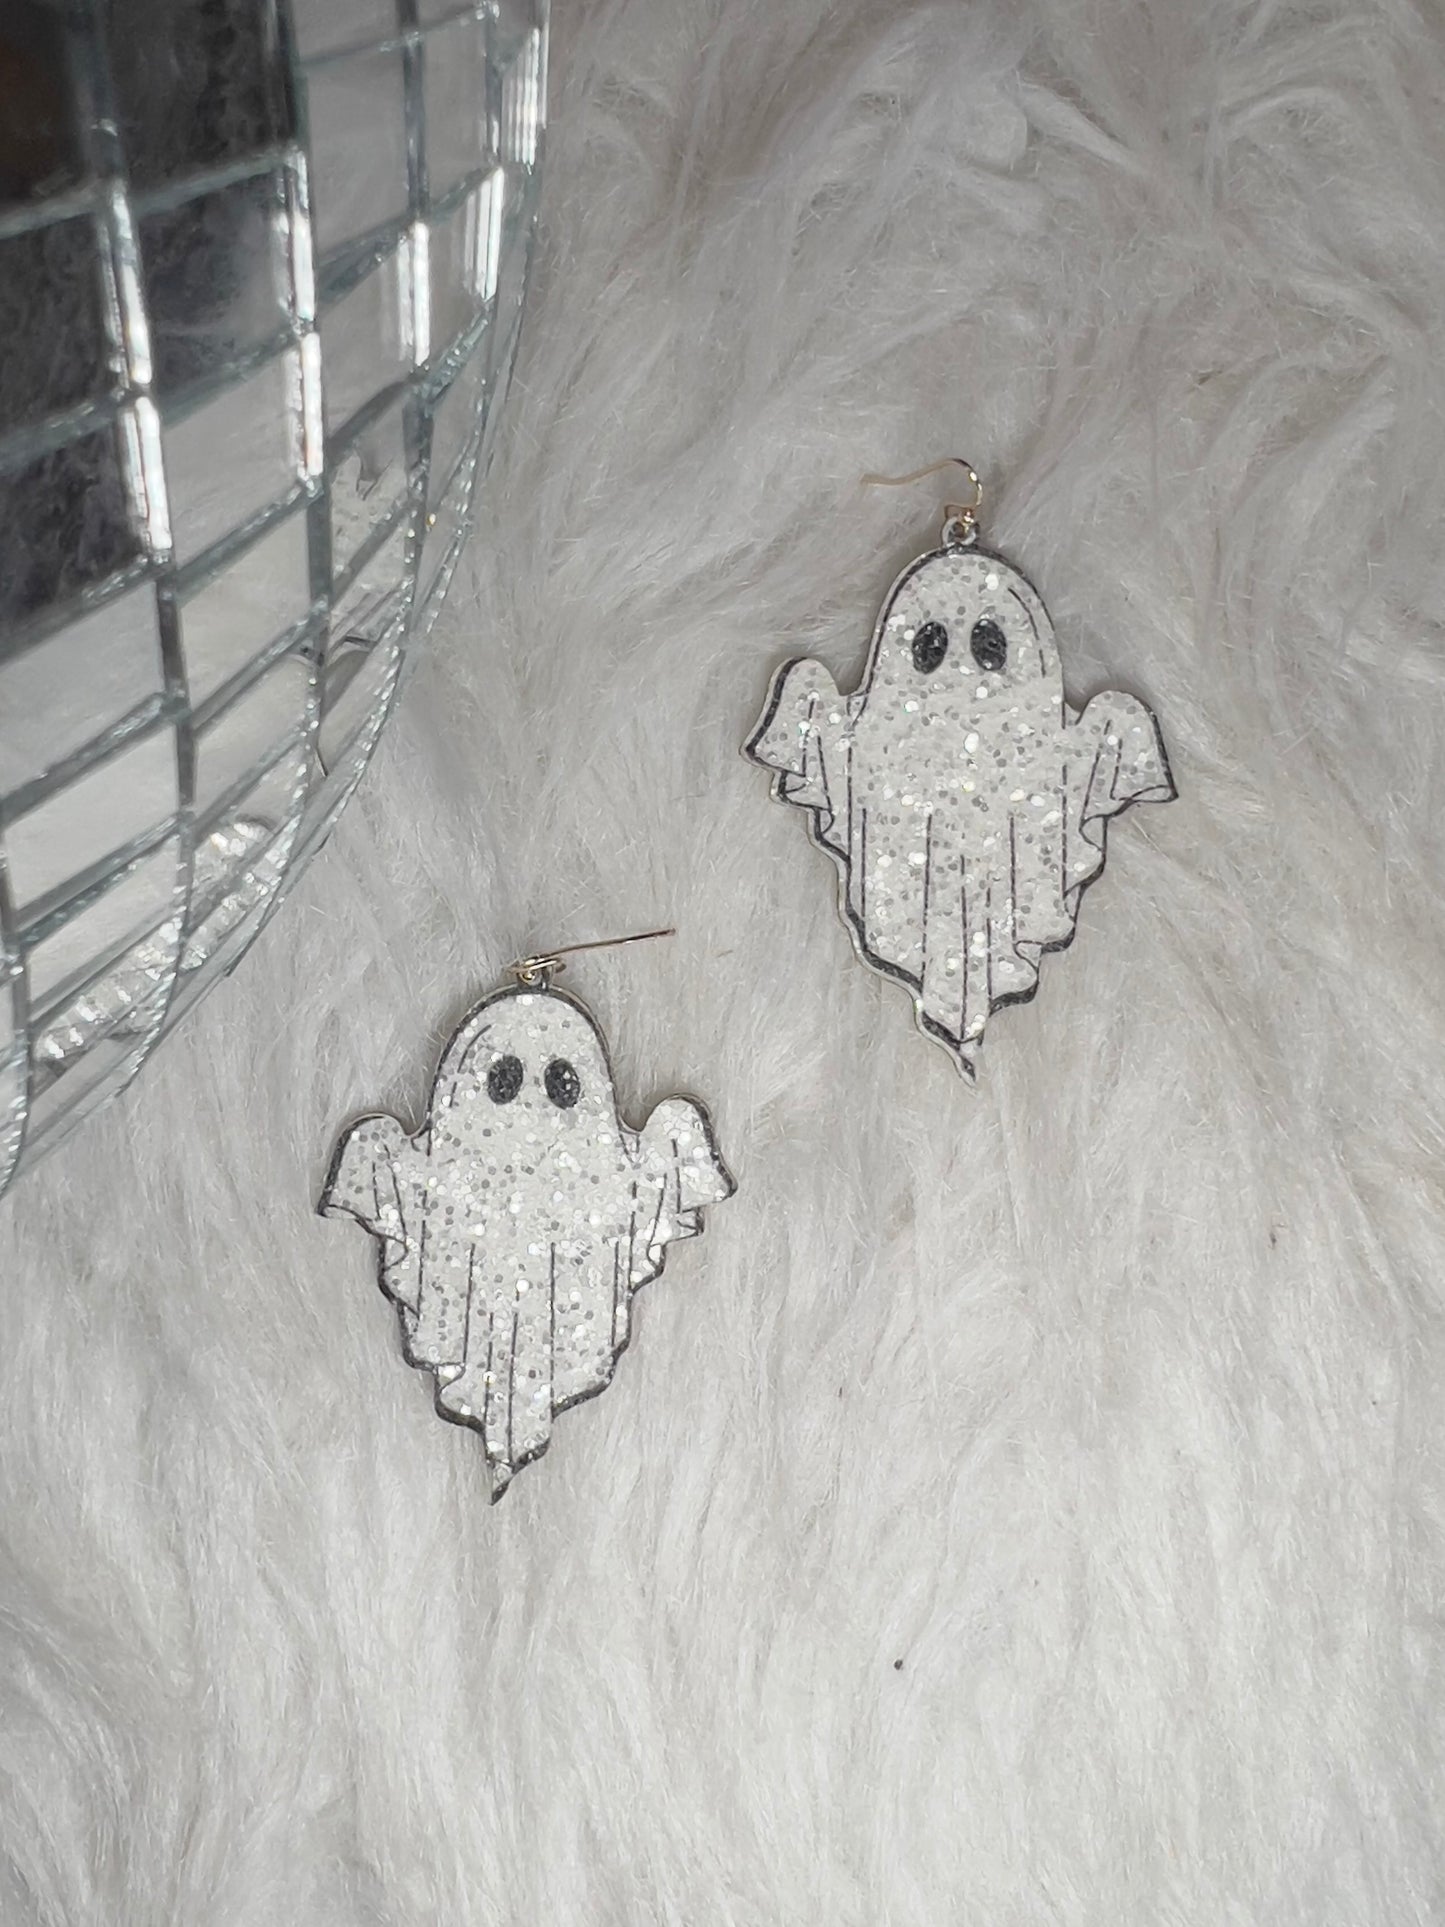 Ghost earrings